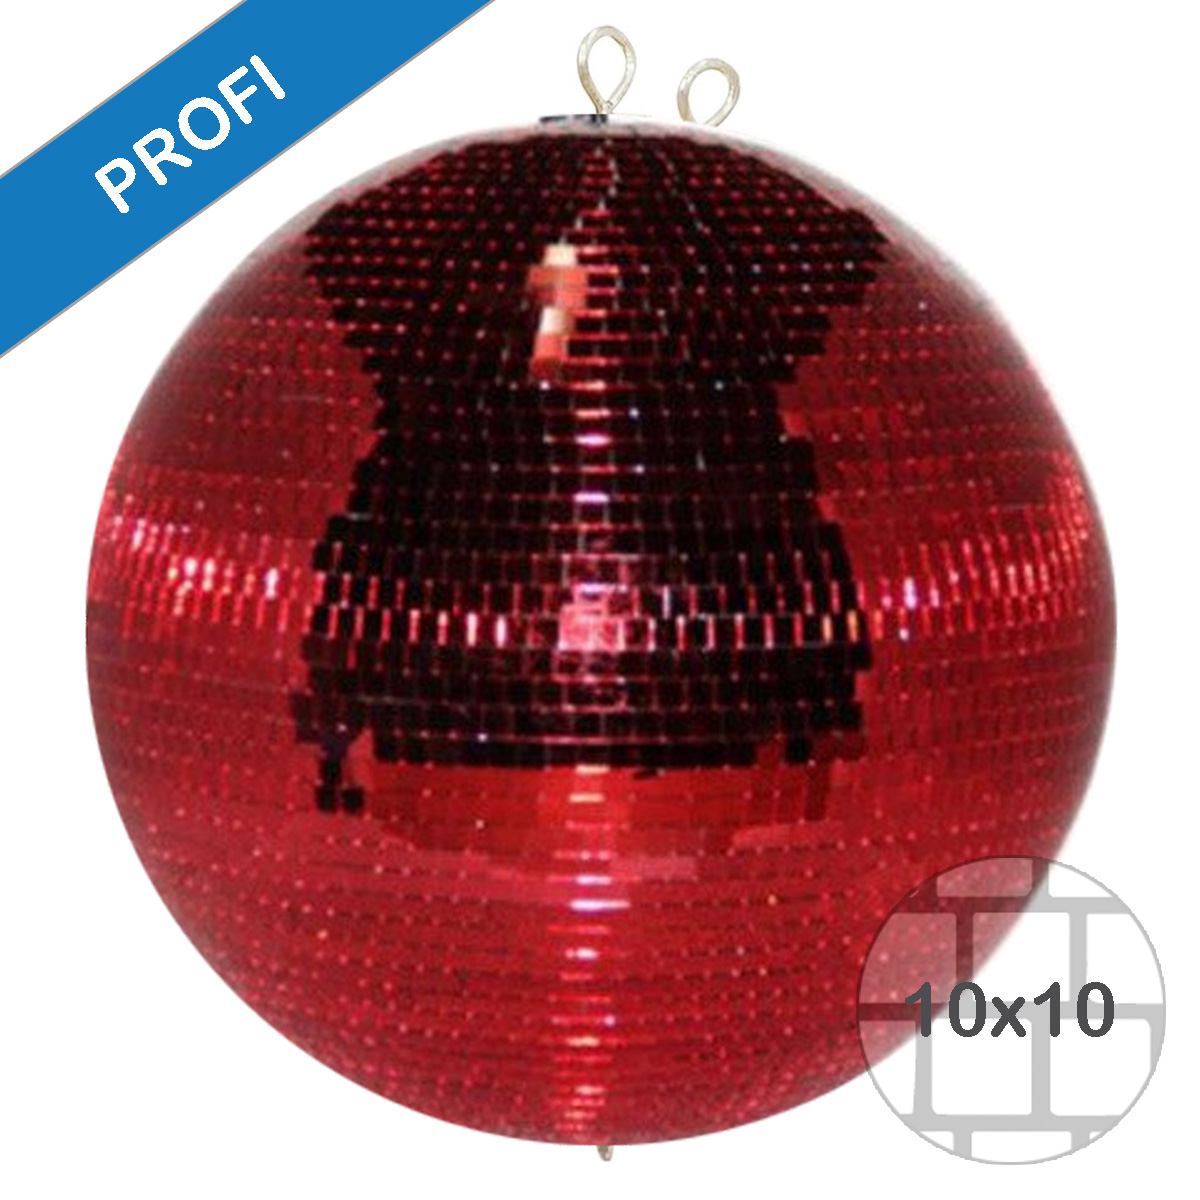 Spiegelkugel 50cm rot- Diskokugel (Discokugel) Party Lichteffekt - Echtglas - mirrorball safety red color